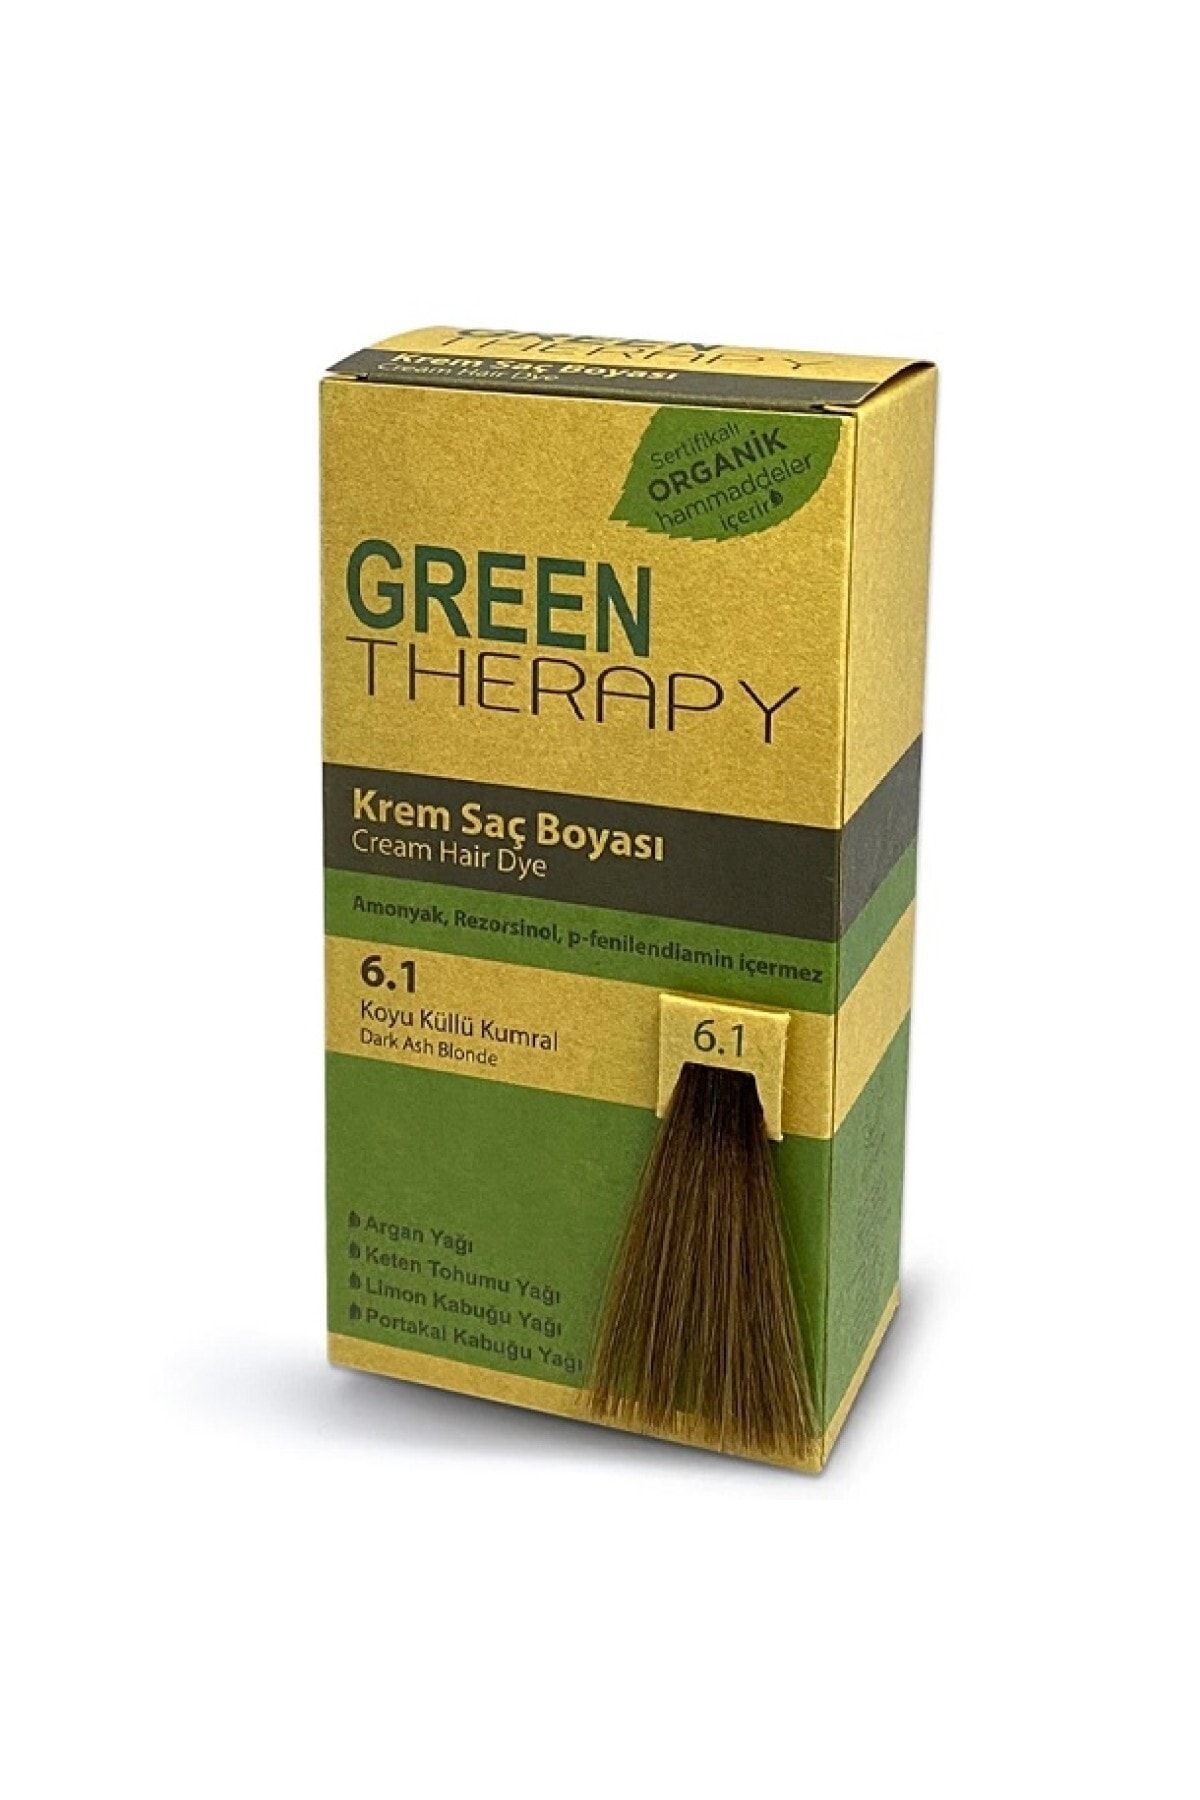 Green Therapy Krem Saç Boyası 6.1 Koyu Küllü Kumral